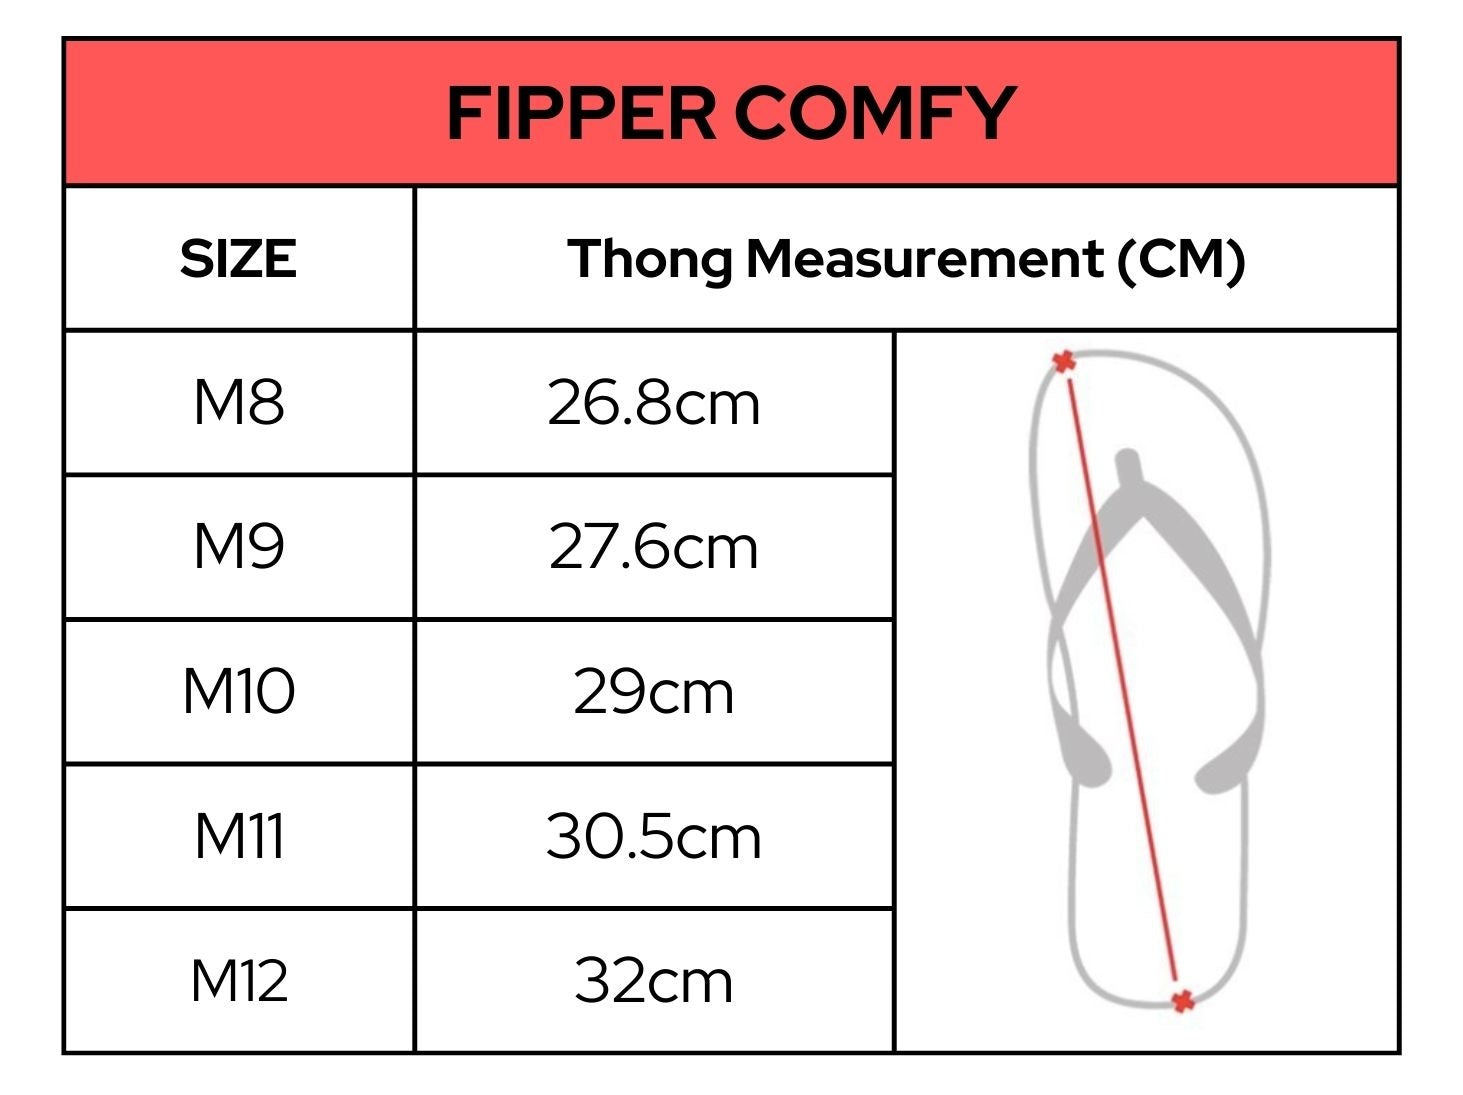 Fipper Comfy Natural Rubber Thongs - Mens